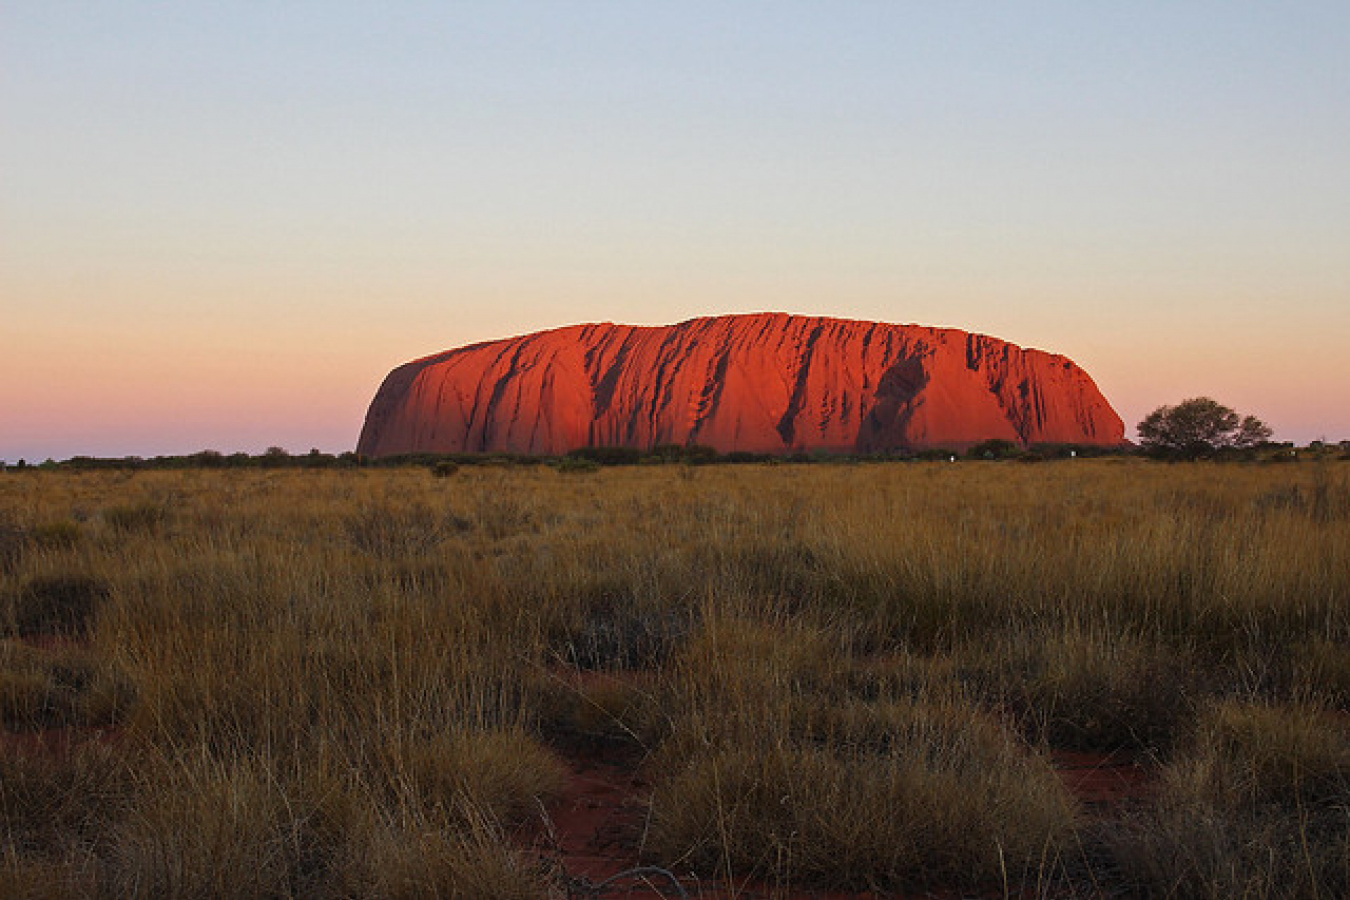 Ayers Rock at sunset, Australia